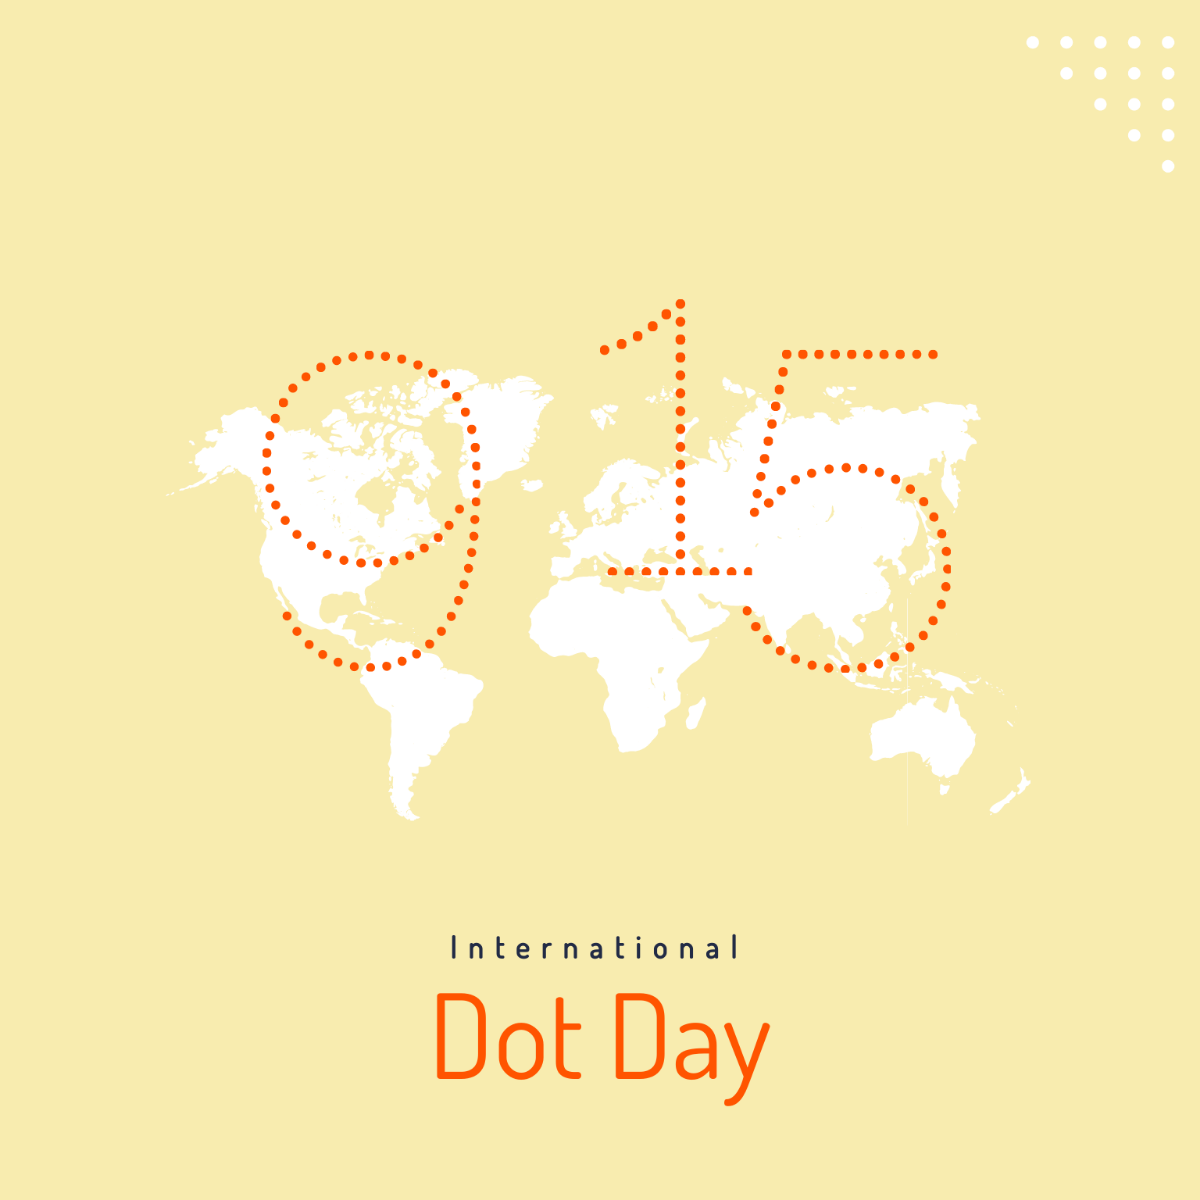 Free International Dot Day Illustration Template